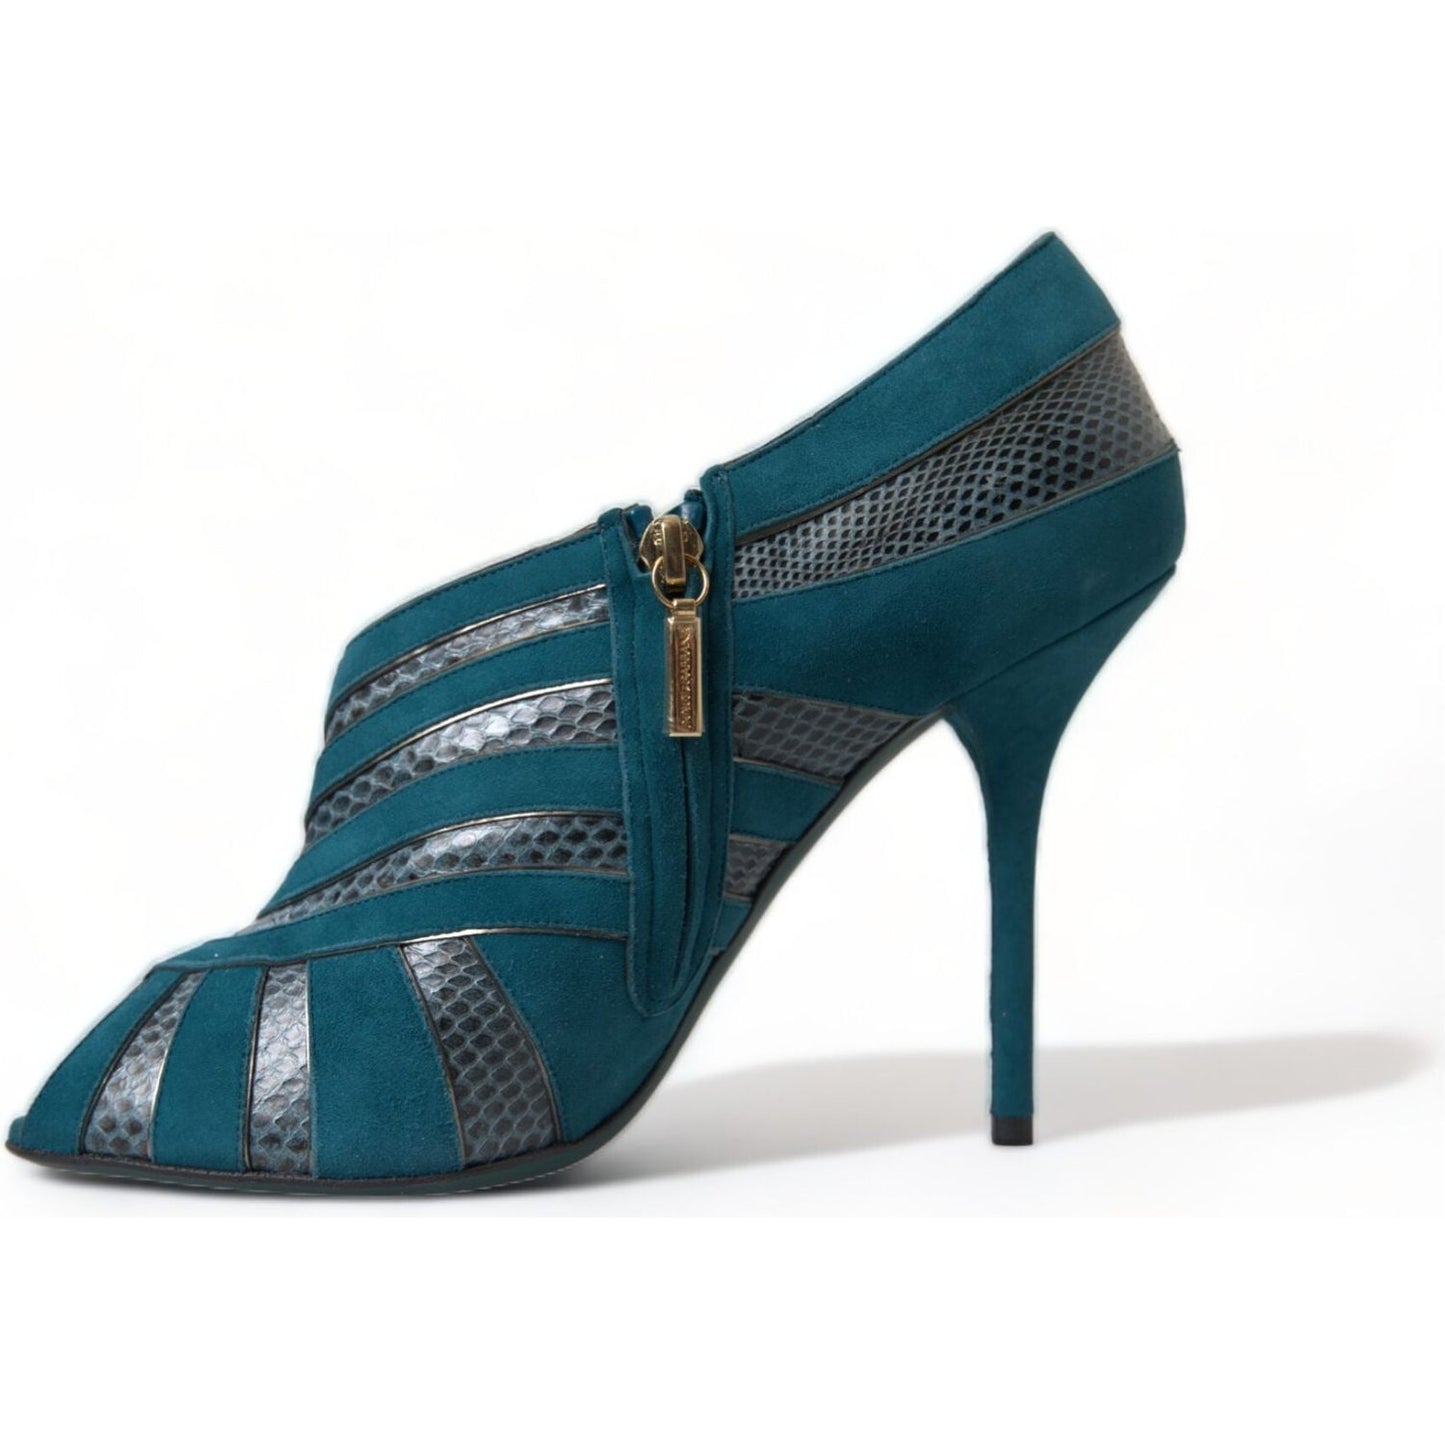 Dolce & Gabbana Teal Suede Peep Toe Heels Pumps teal-suede-leather-peep-toe-heels-pumps-shoes 465A2710-BG-scaled-efc2f4f5-621.jpg